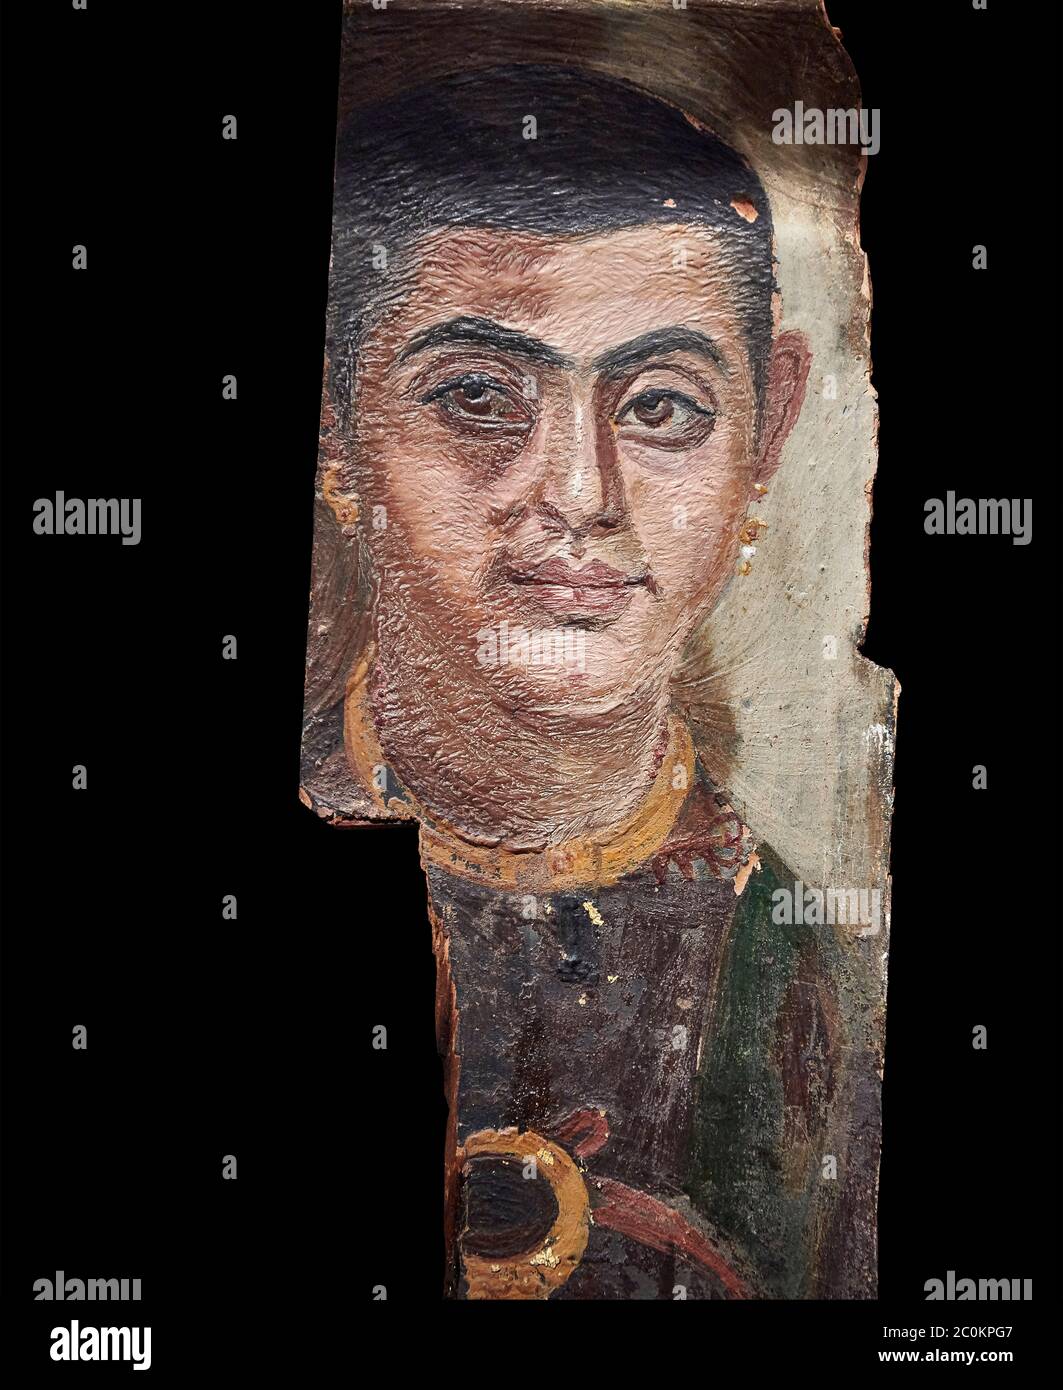 Egyptian Roman mummy portrait or Fayum mummy portrait painted panel of a man, Roman Period, 1st to 3rd cent AD, Egypt. Egyptian Museum, Turin. Black b Stock Photo